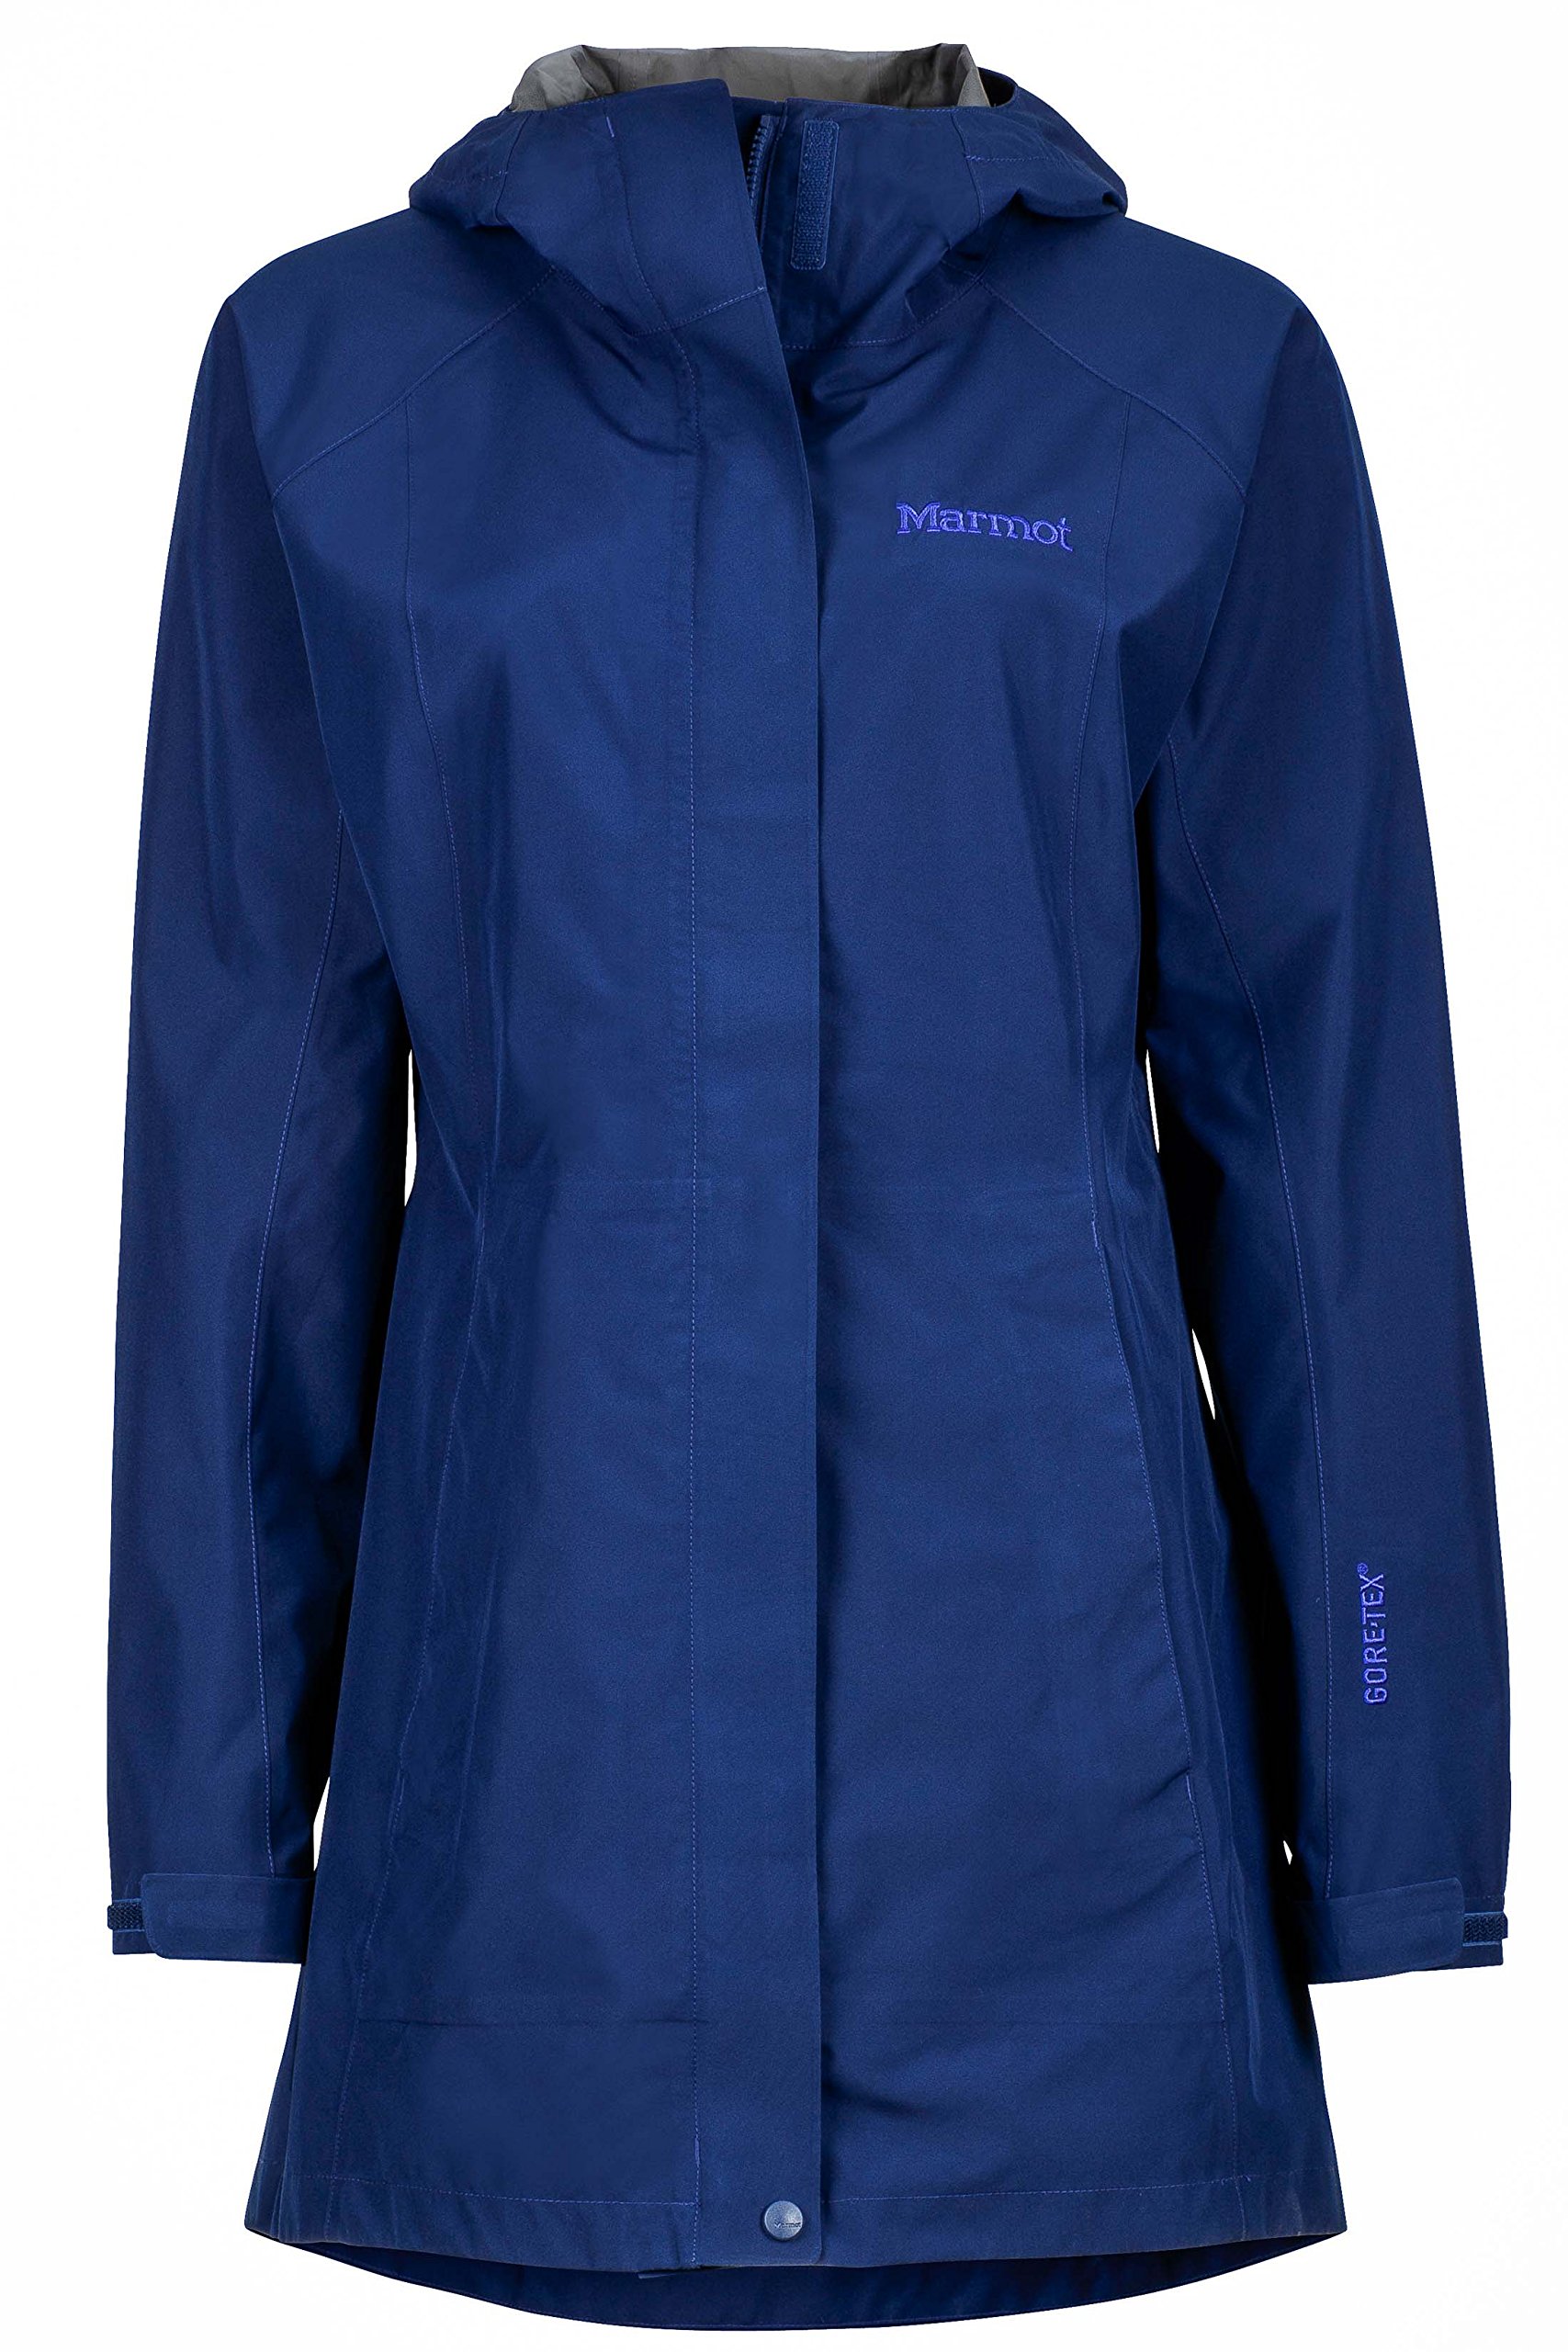 Marmot Women's Essential Lightweight Waterproof Rain Jacket, GORE-TEX with PACLITE Technology